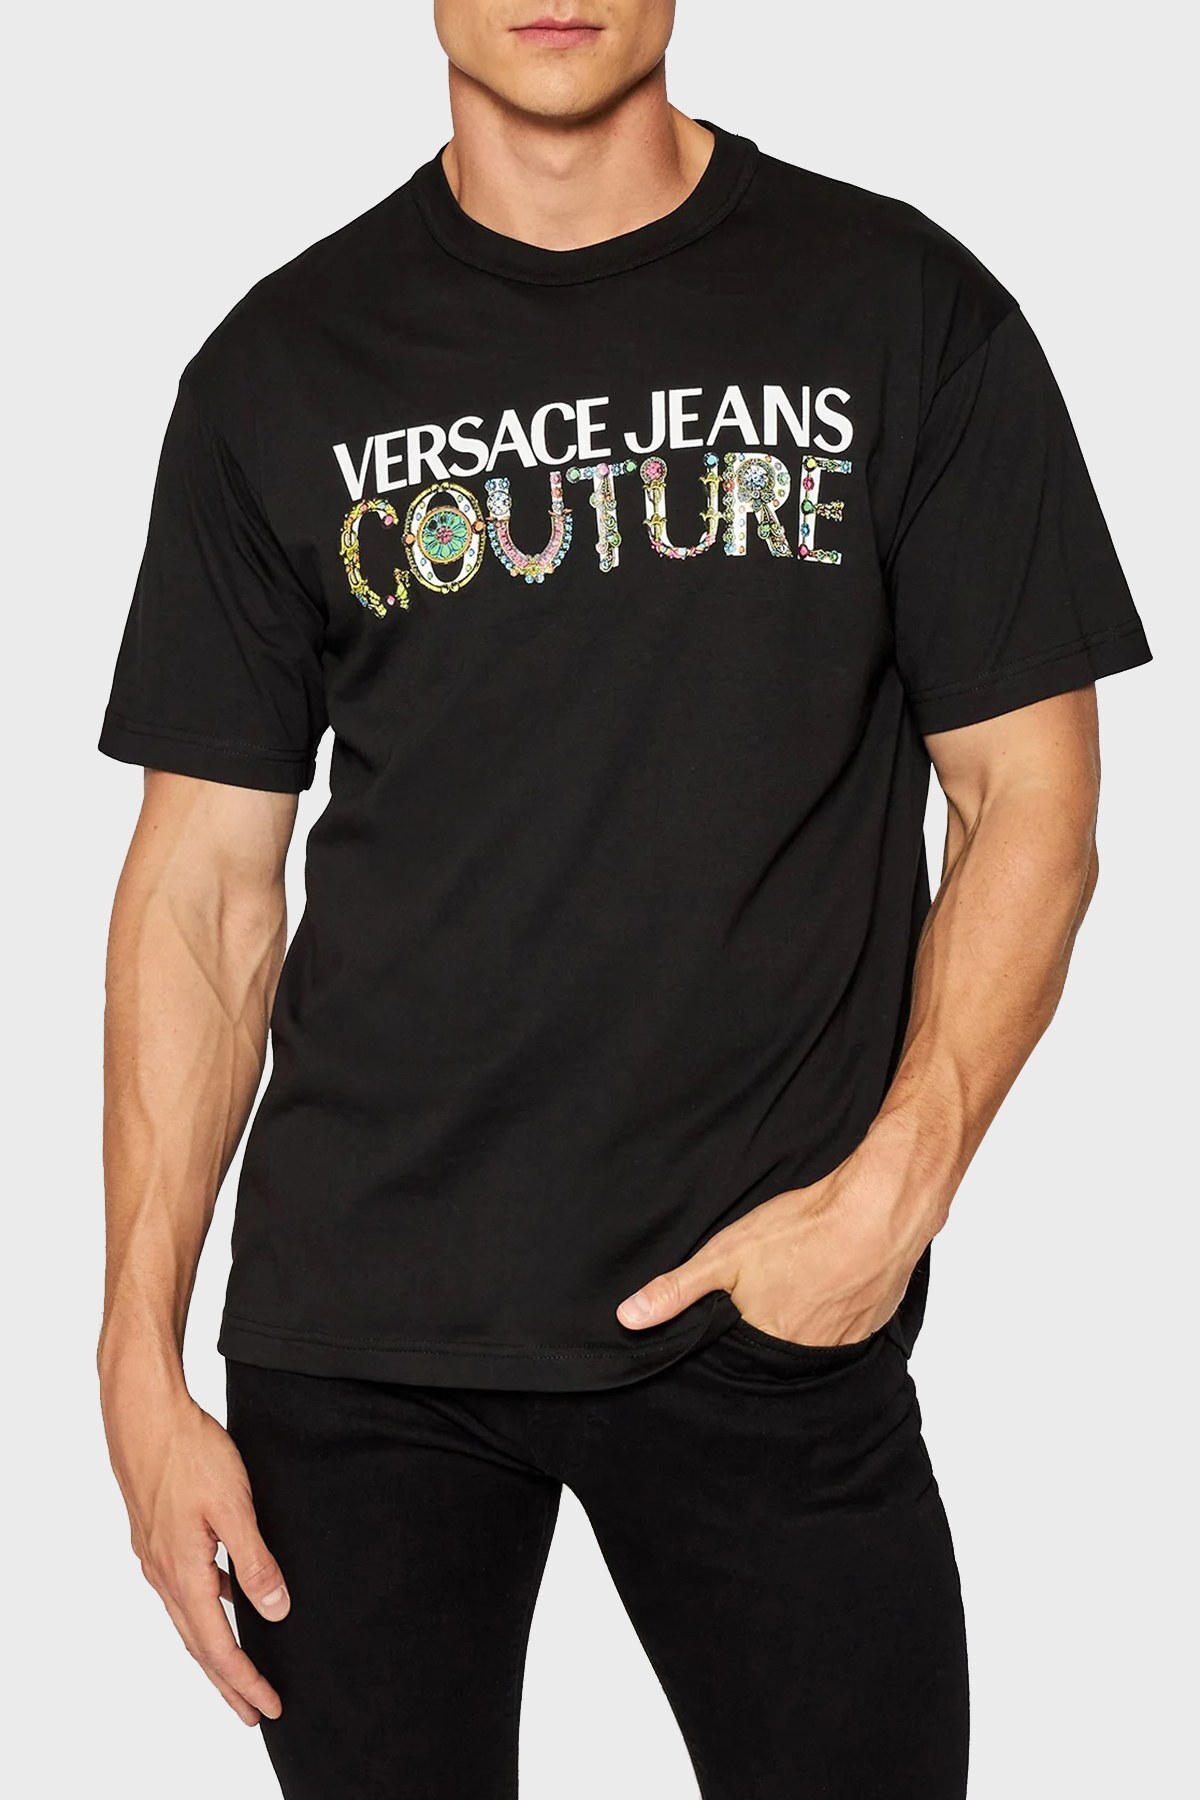 Versace Jeans Couture Baskılı Regular Fit Bisiklet Yaka Pamuklu Erkek T Shirt 71GAHF04 CJ00F 899 SİYAH